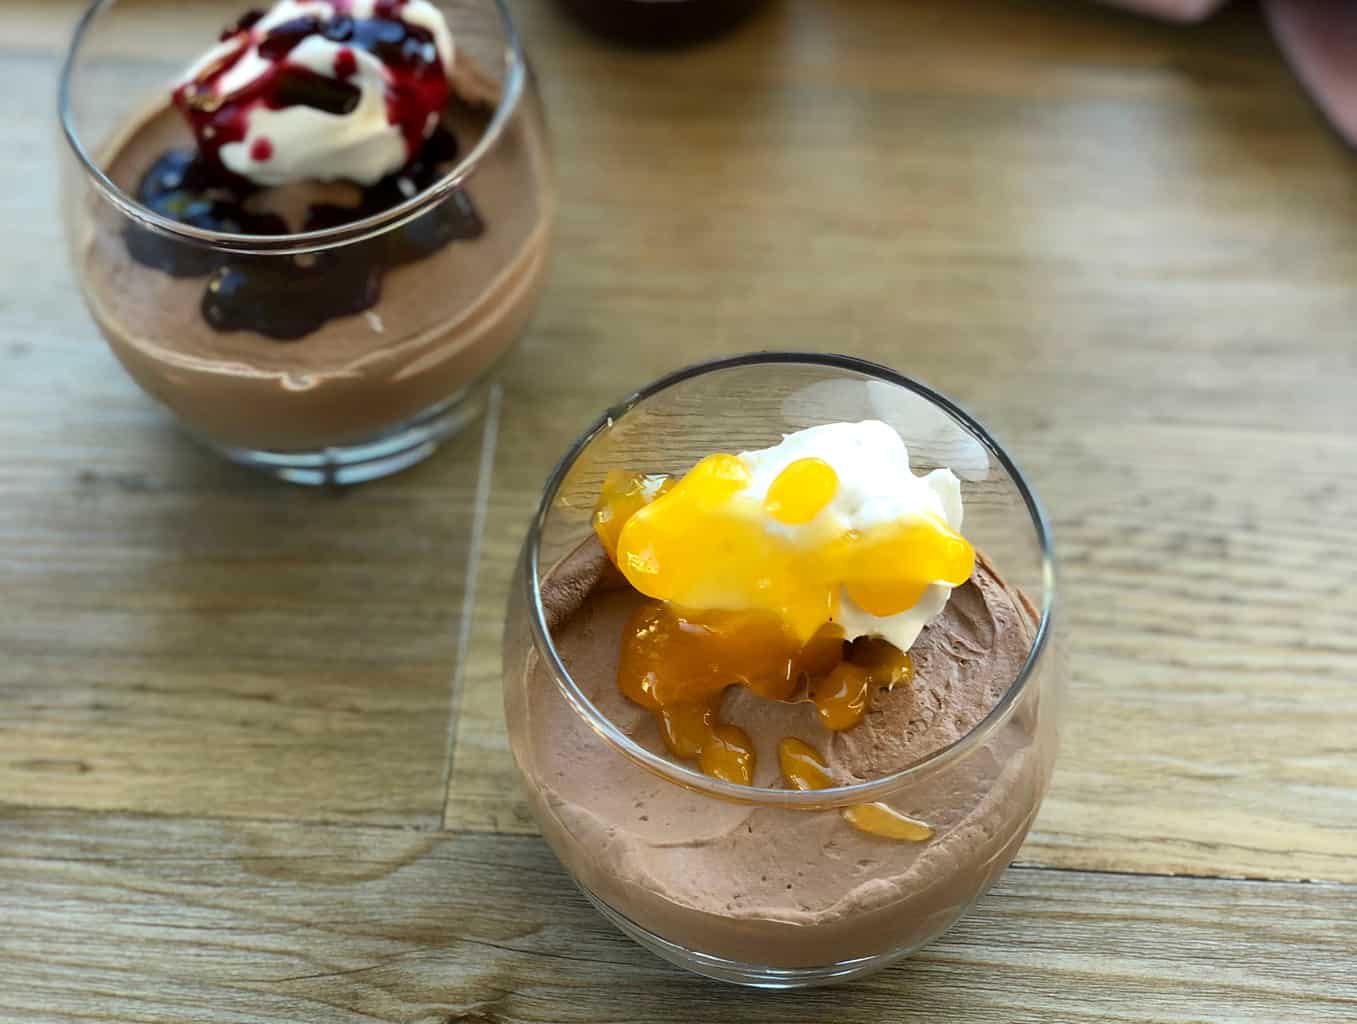 Coconut Cream Chocolate Mousse with Mango Dessert Sauce